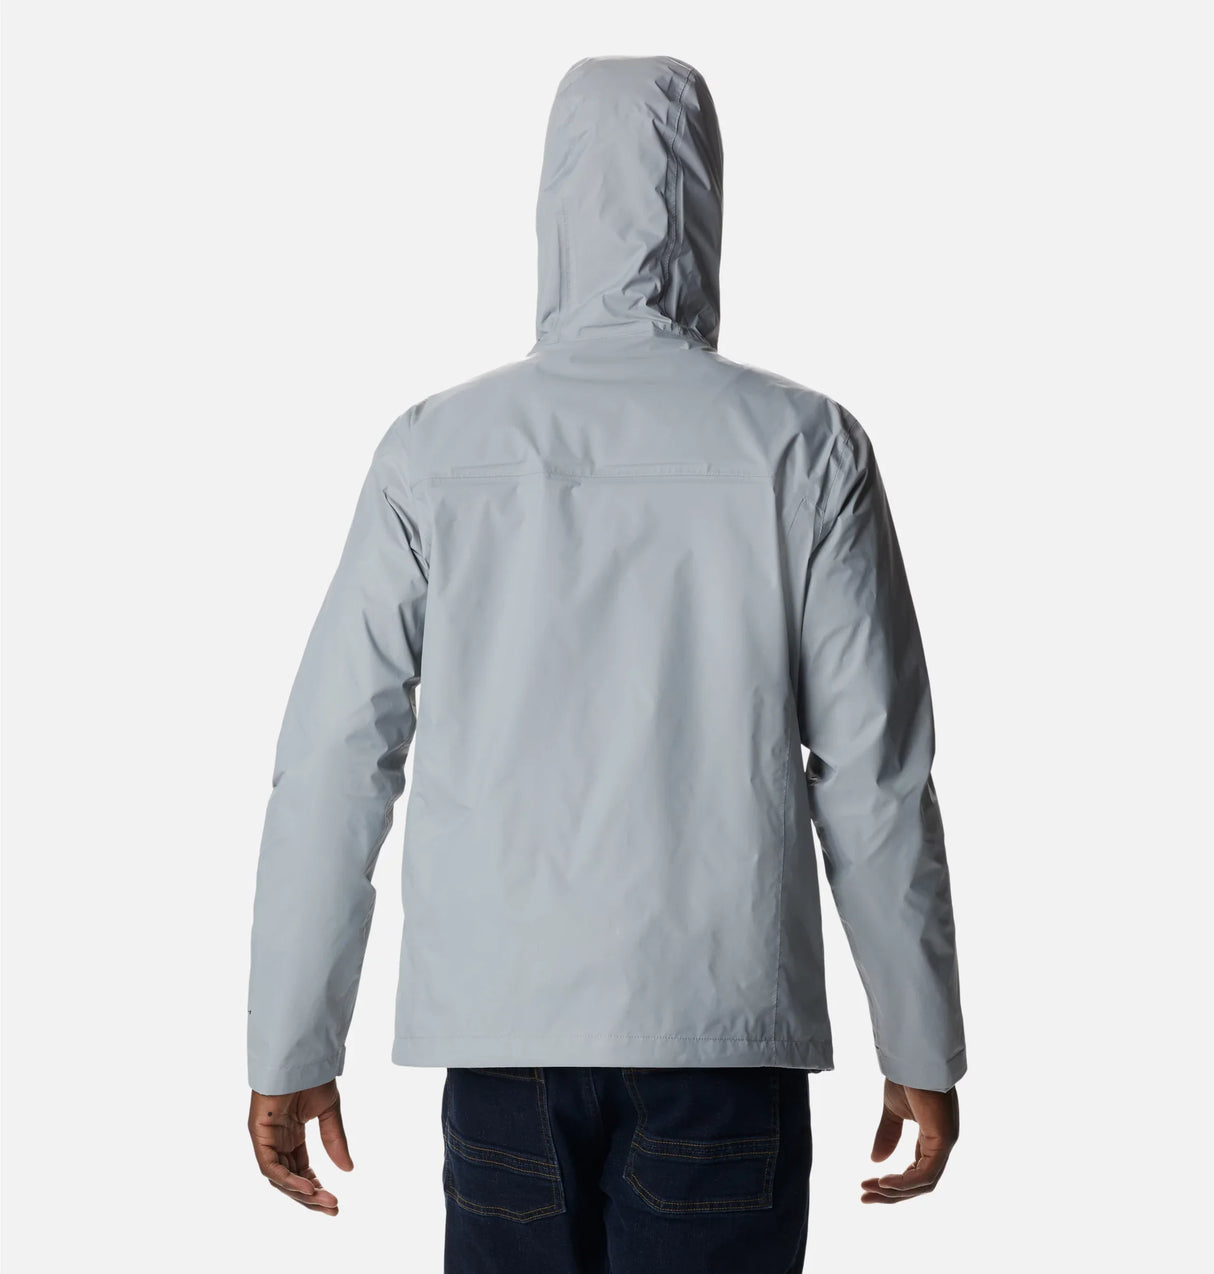 Columbia Men's Watertight™ II Rain Jacket